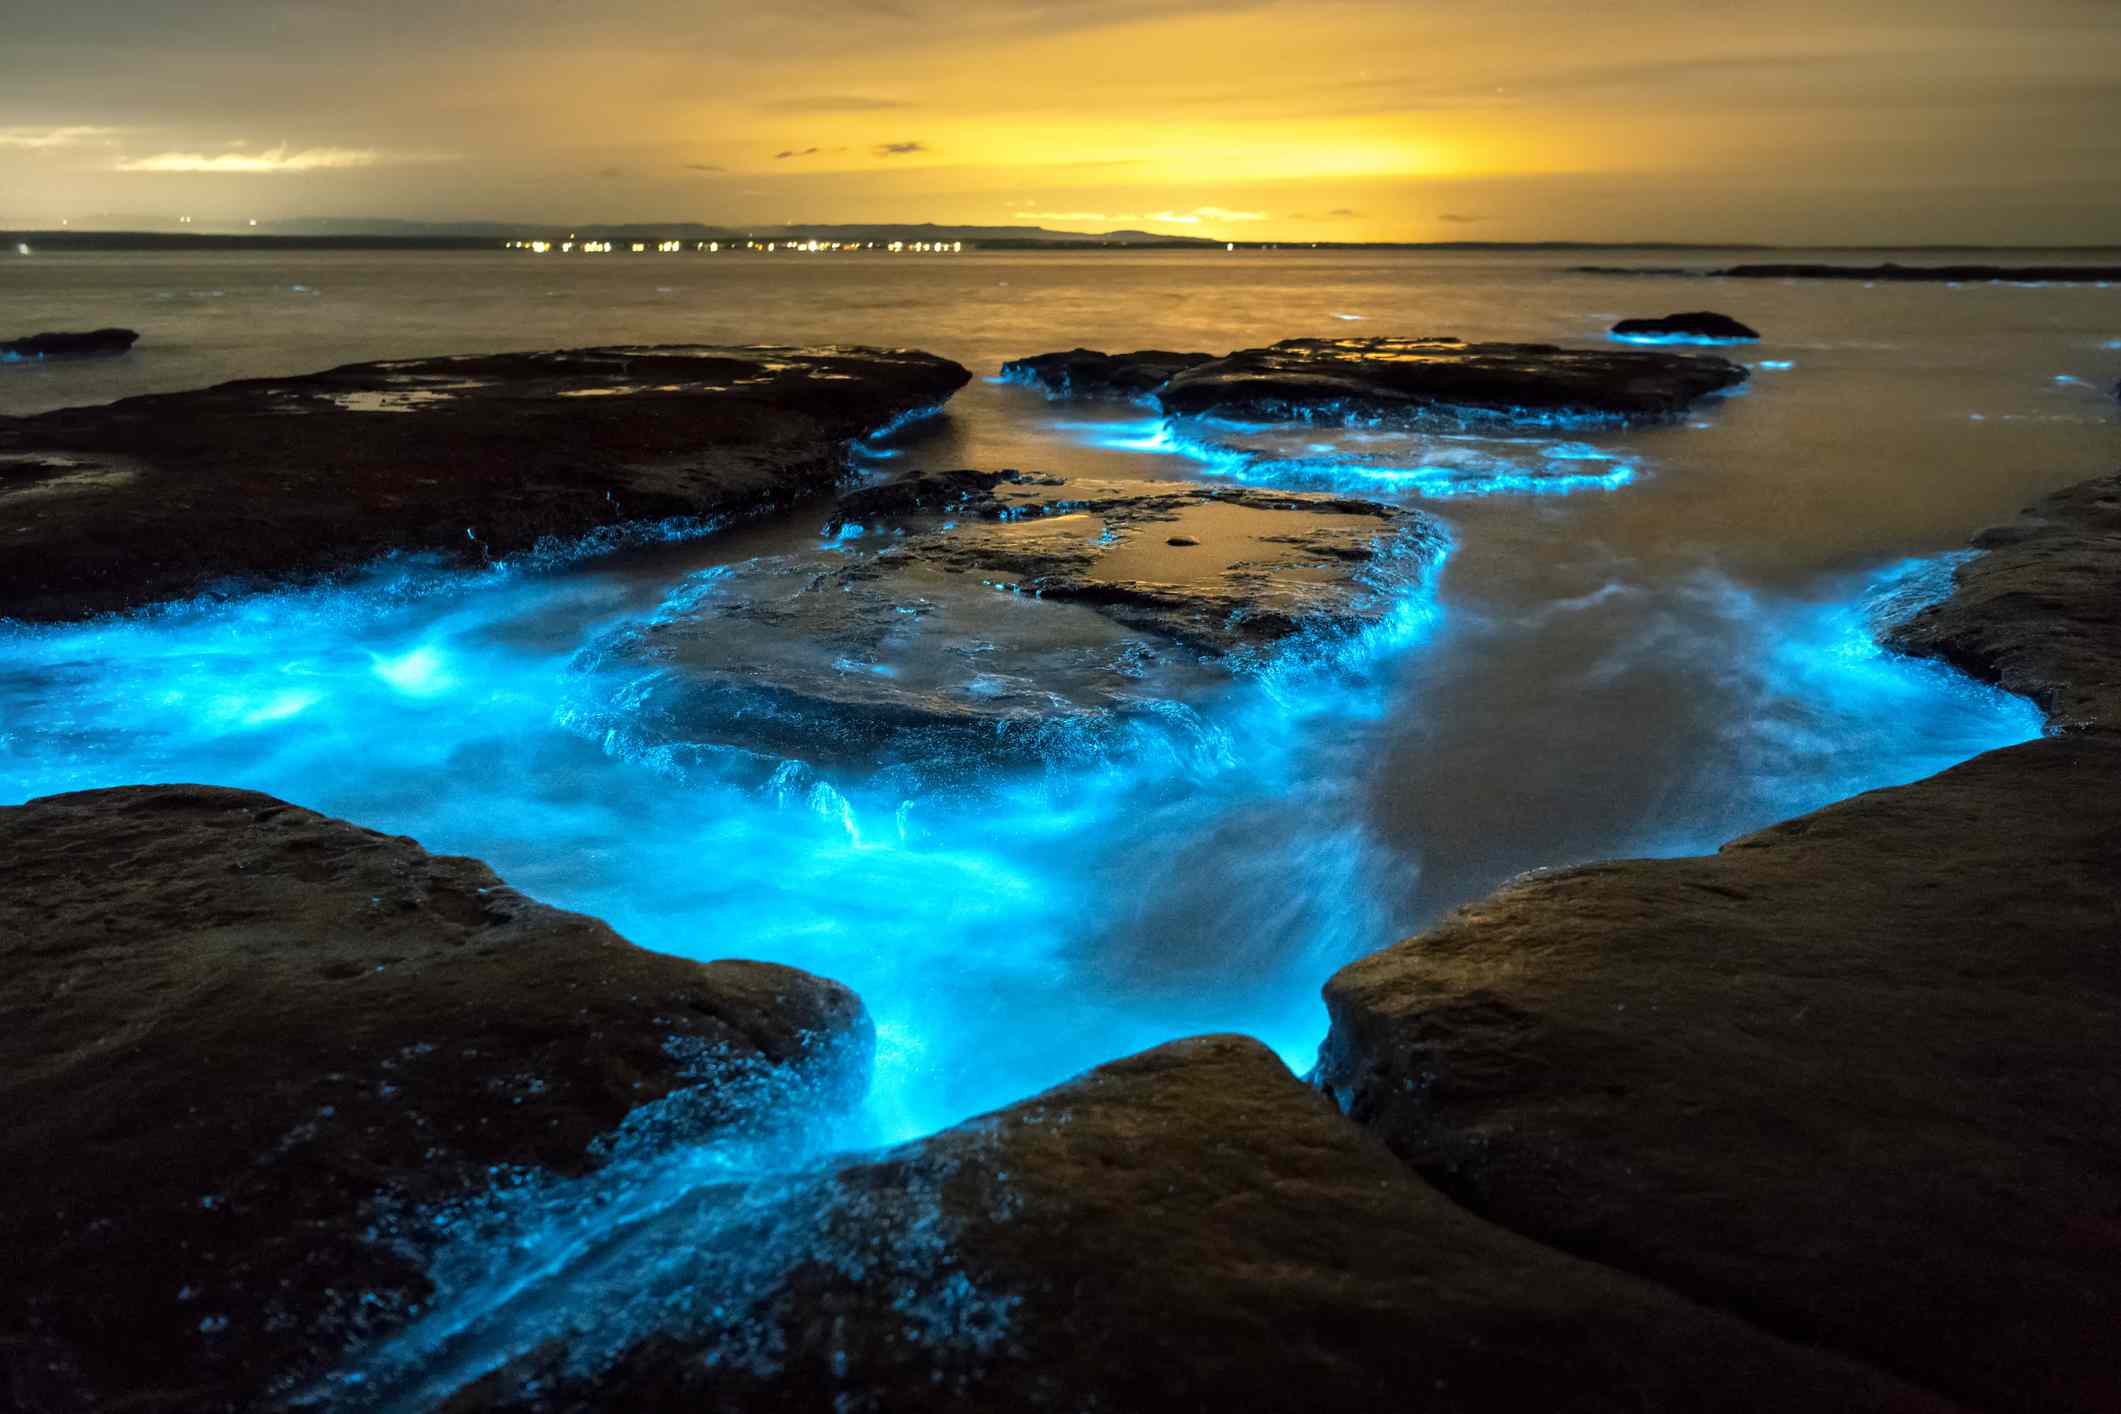 La bioluminiscencia ilumina la bahía de Jervis al atardecer